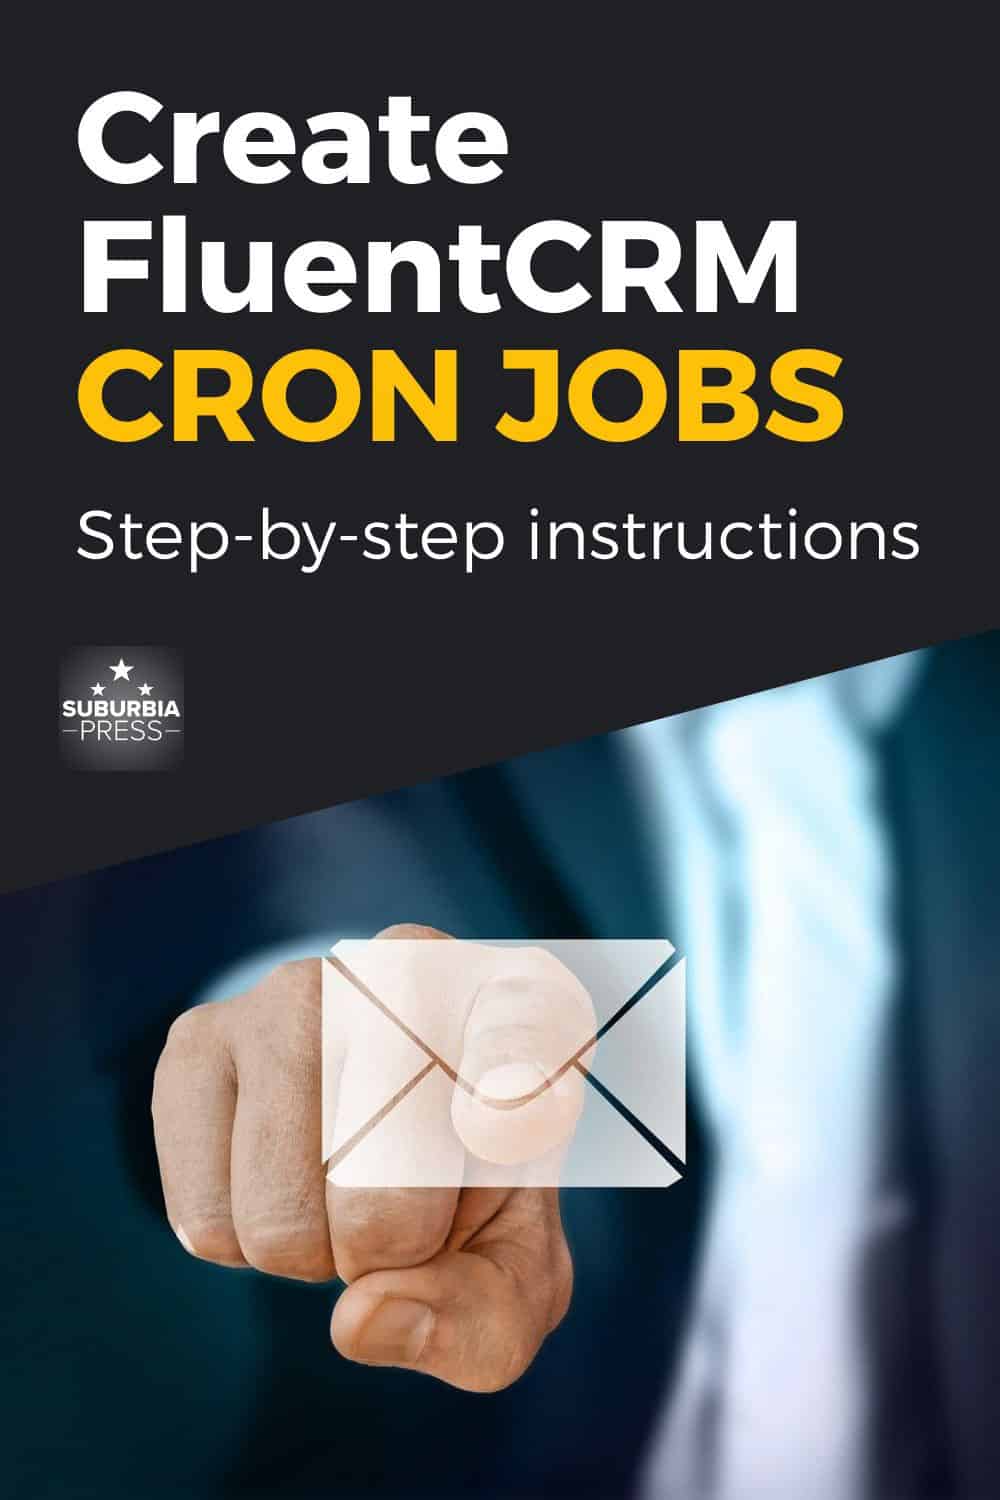 FluentCRM Cron Jobs